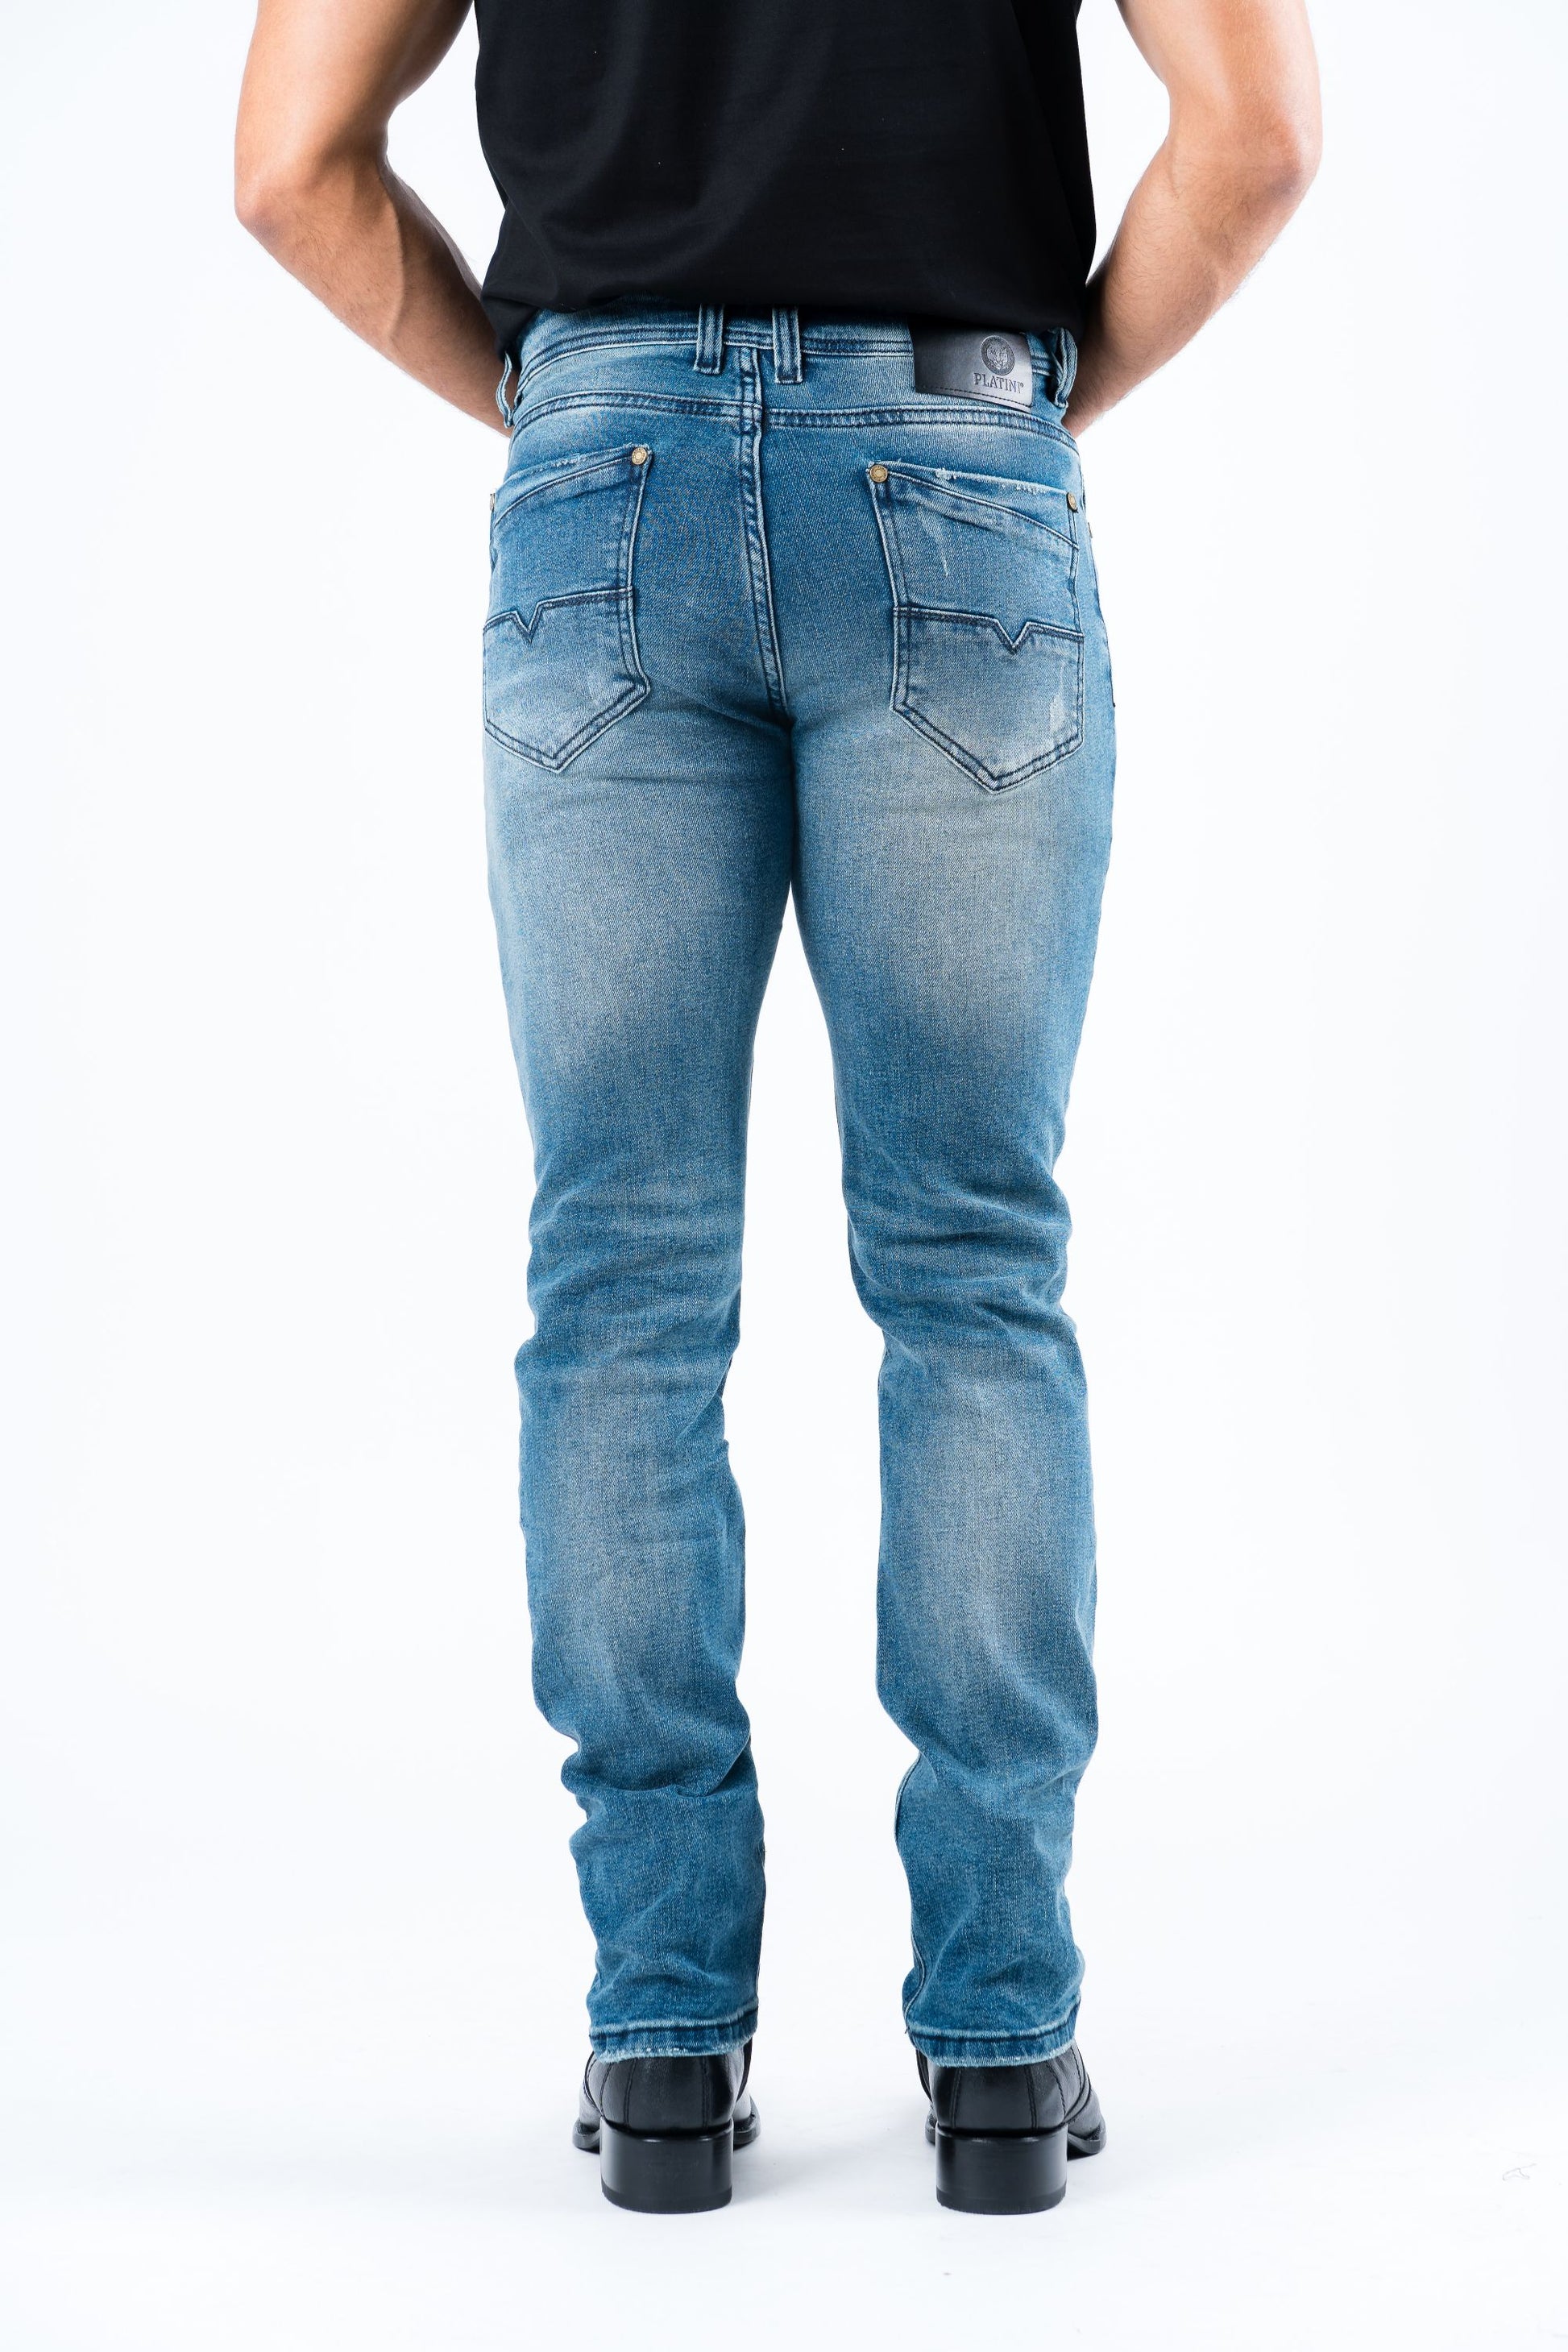 Pax Men\'s Dark Blue Fashion Platini Jeans – Stretch Slim